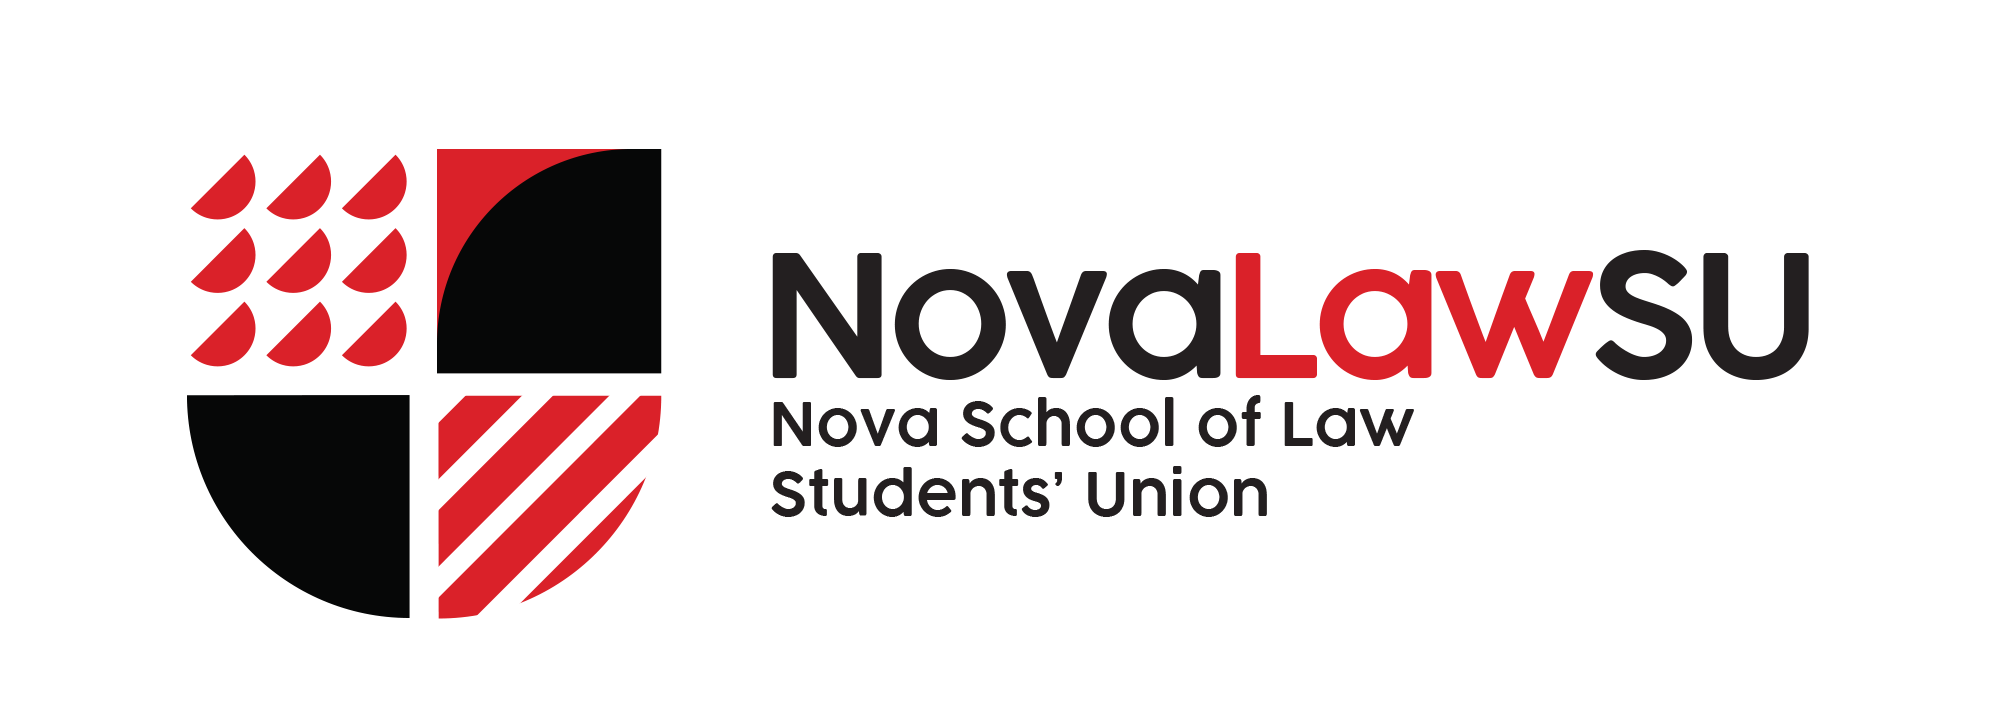 Nova Law SU - NOVA School of Law Students Union